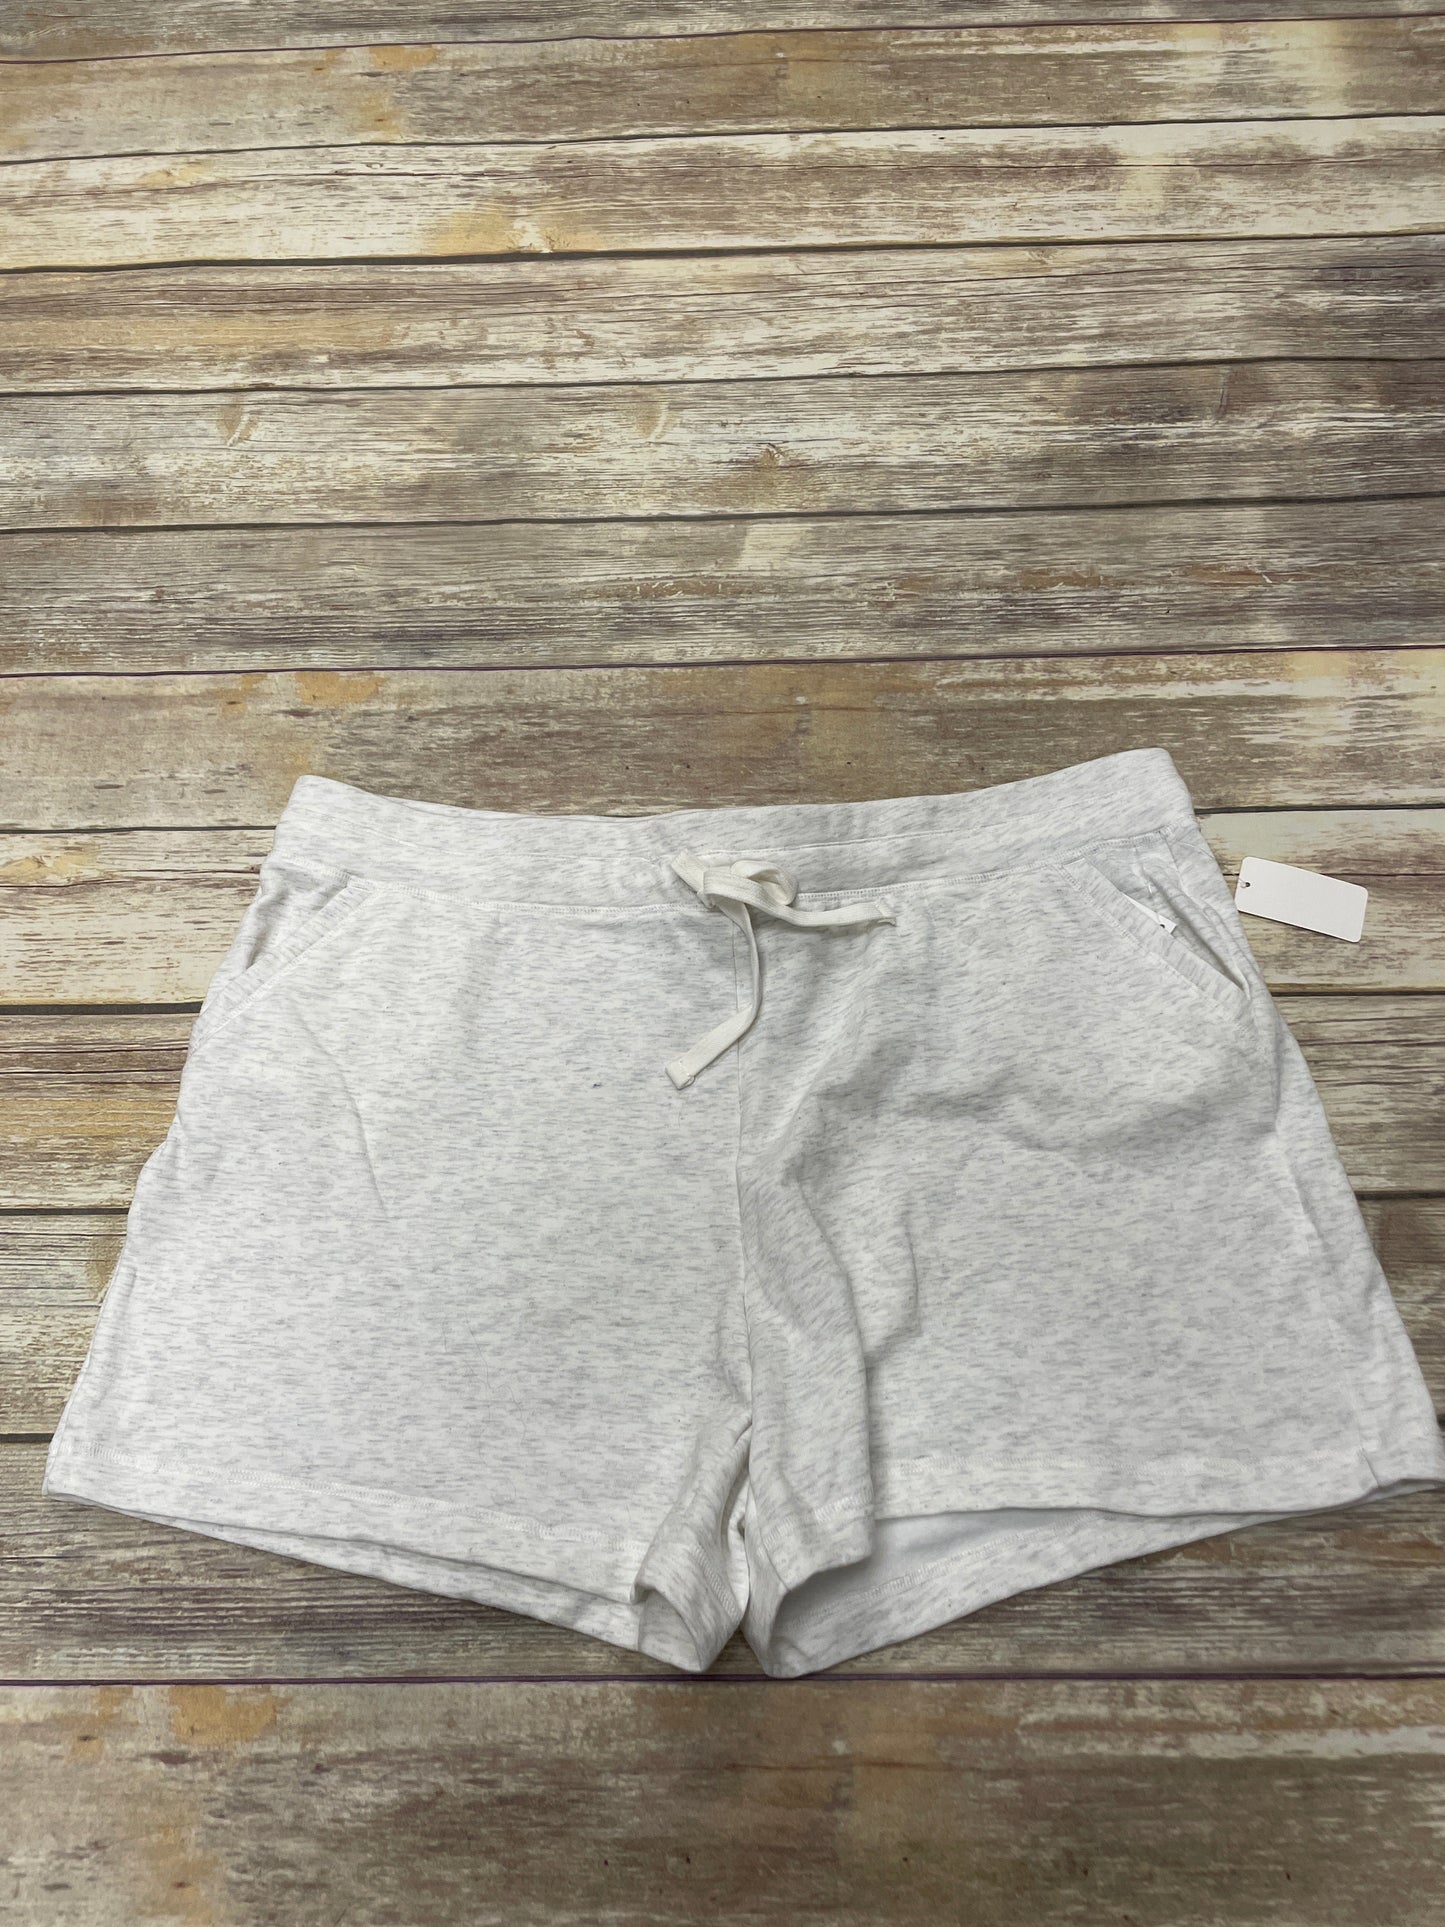 Grey Athletic Shorts 32 Degrees, Size 2x